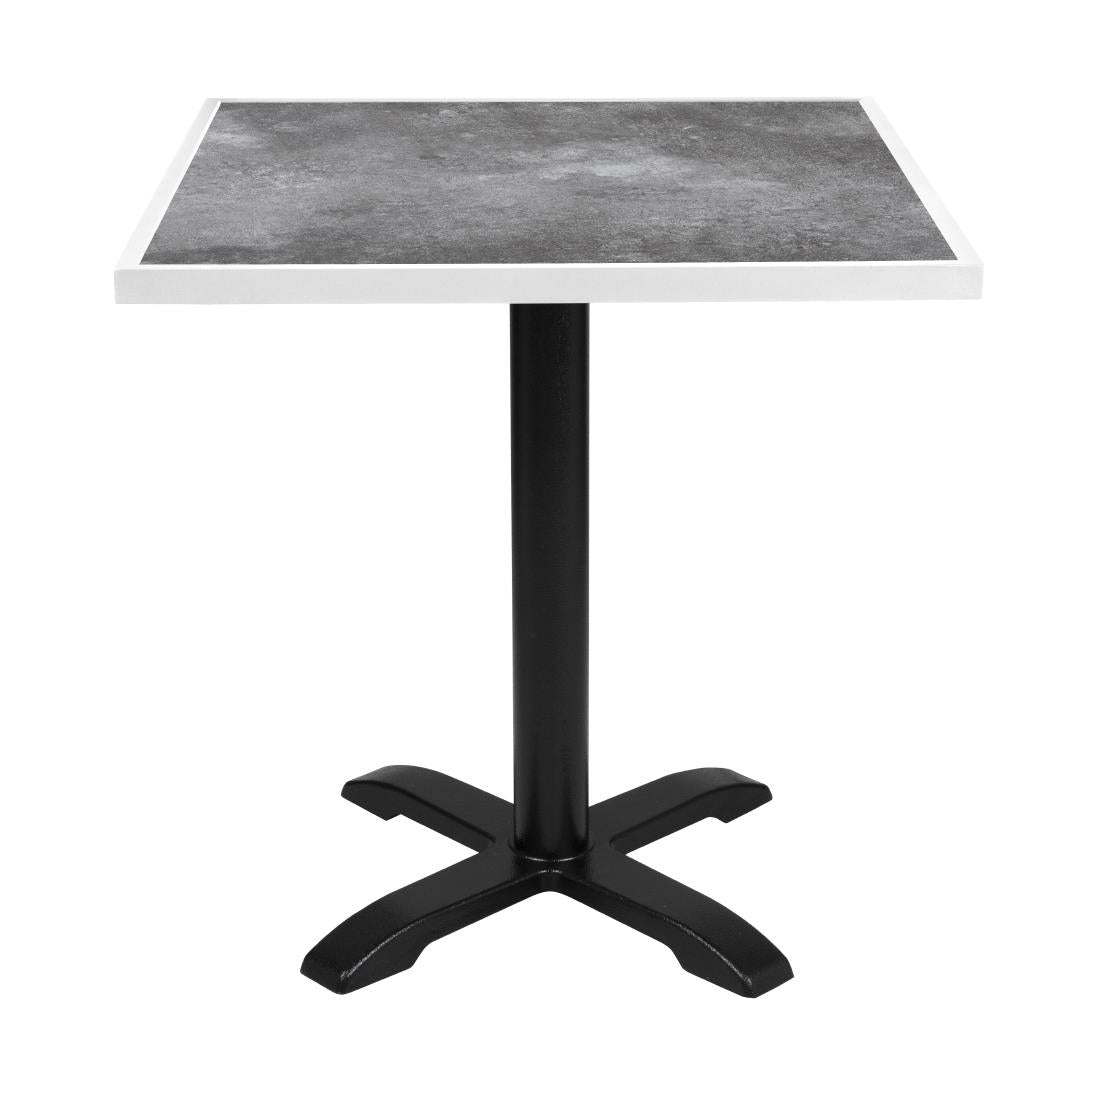 FU517 Bolero Dark Stone Effect Outdoor Tempered Glass Table Top White Trim - 700mm